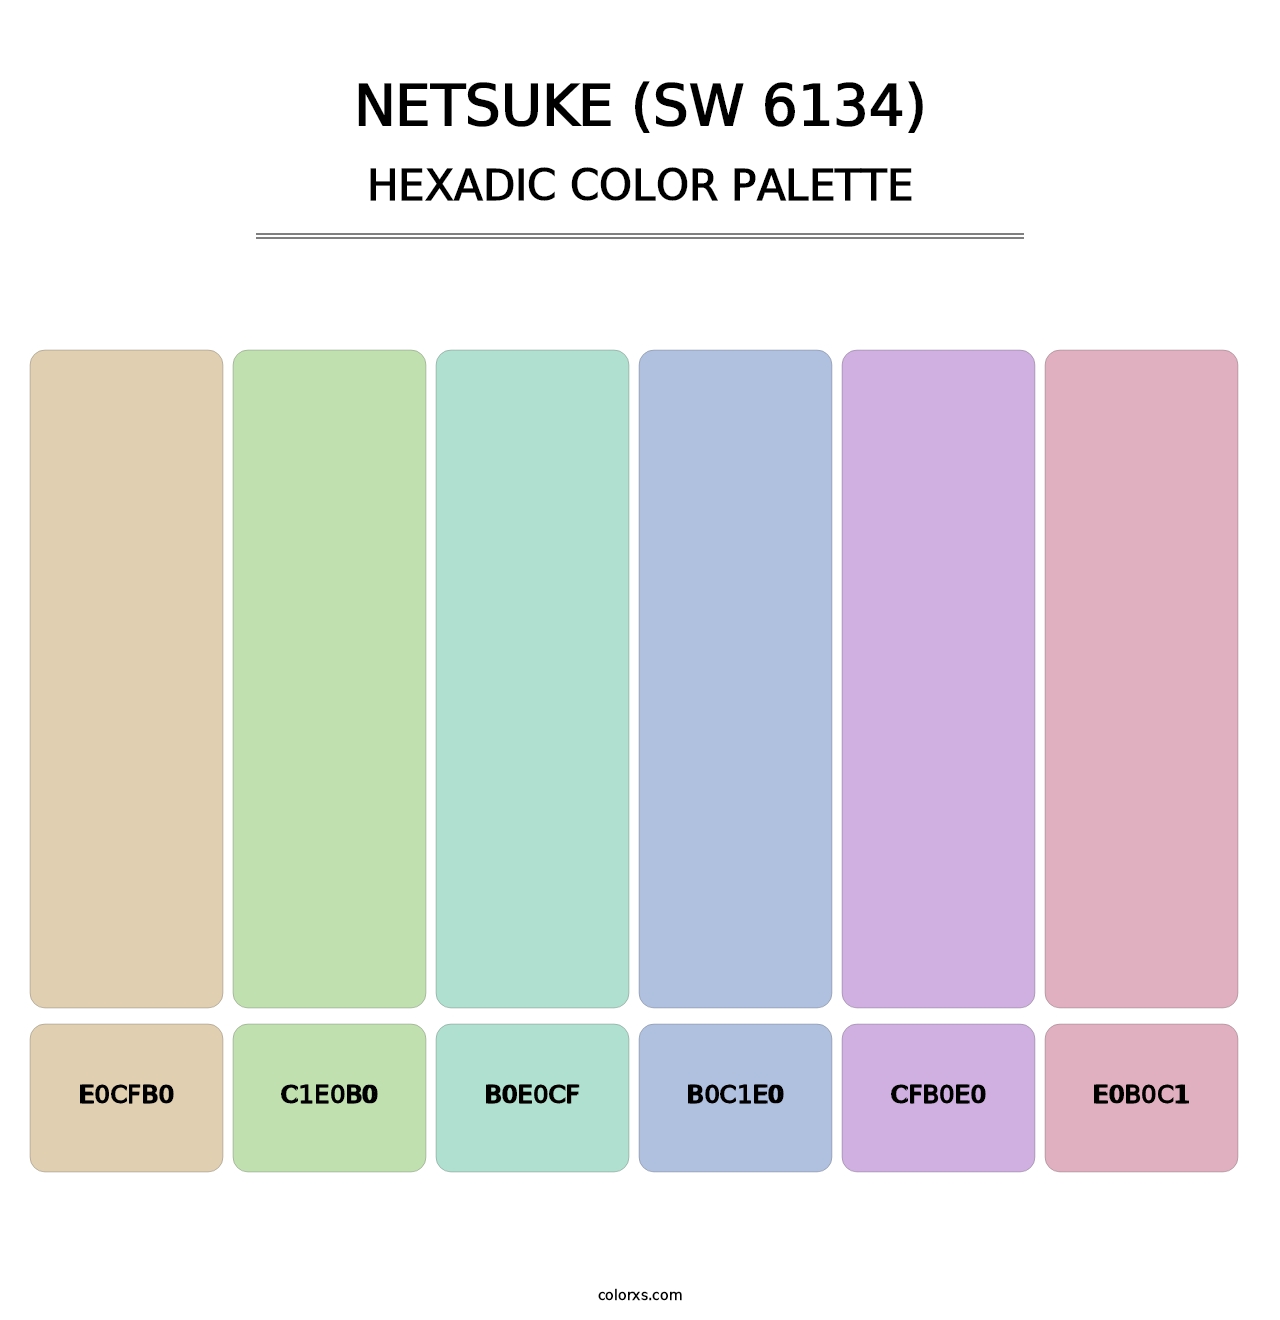 Netsuke (SW 6134) - Hexadic Color Palette